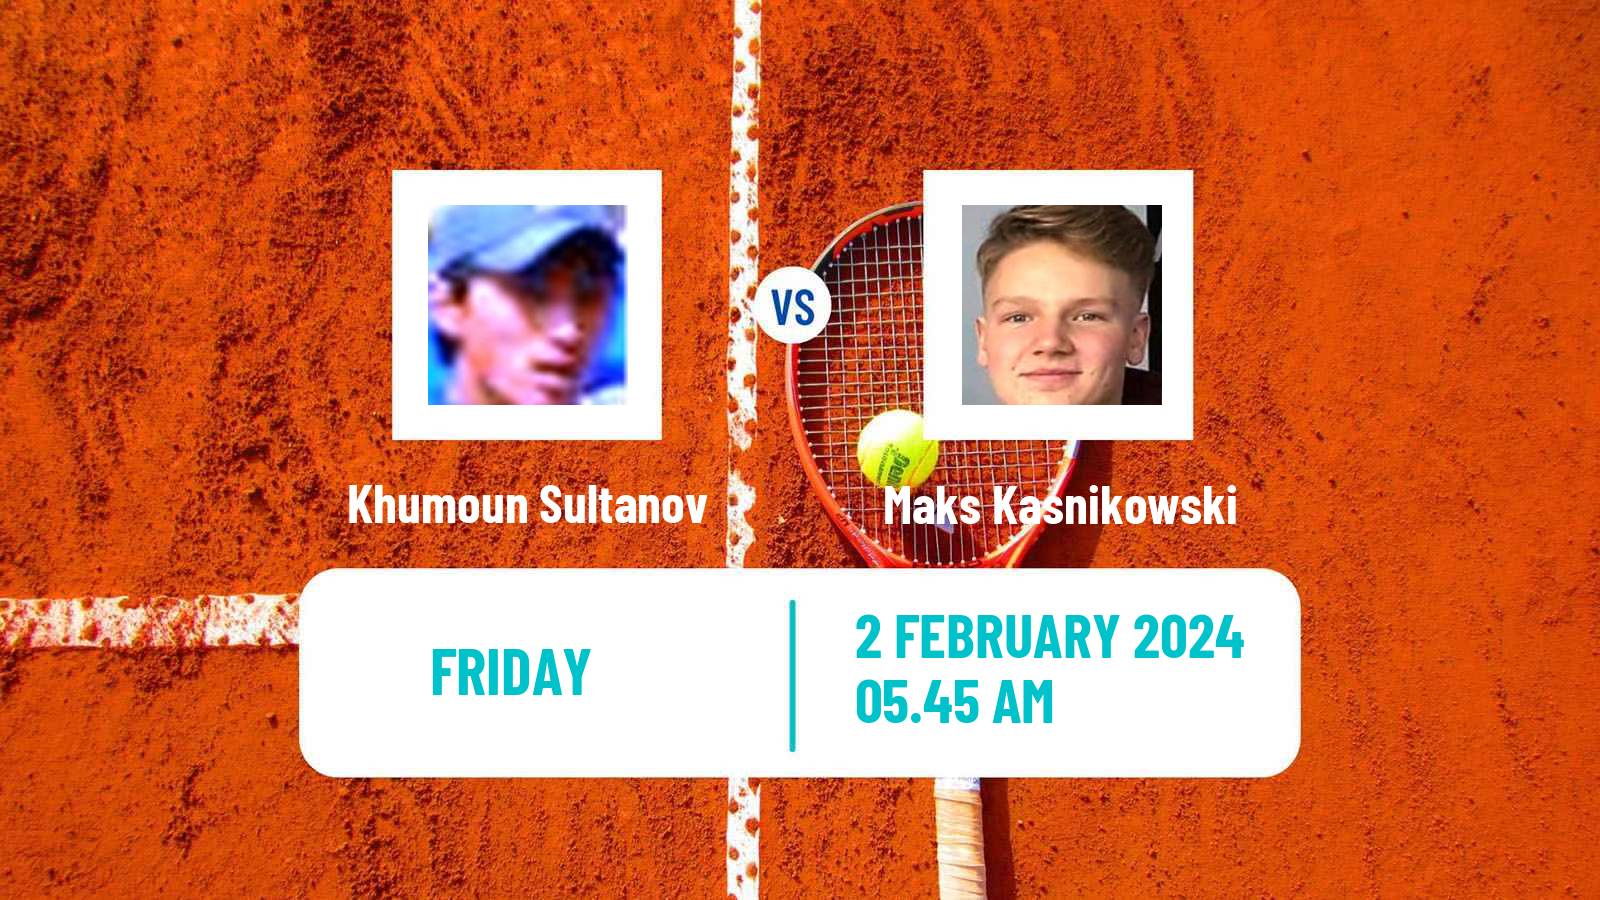 Tennis Davis Cup World Group I Khumoun Sultanov - Maks Kasnikowski